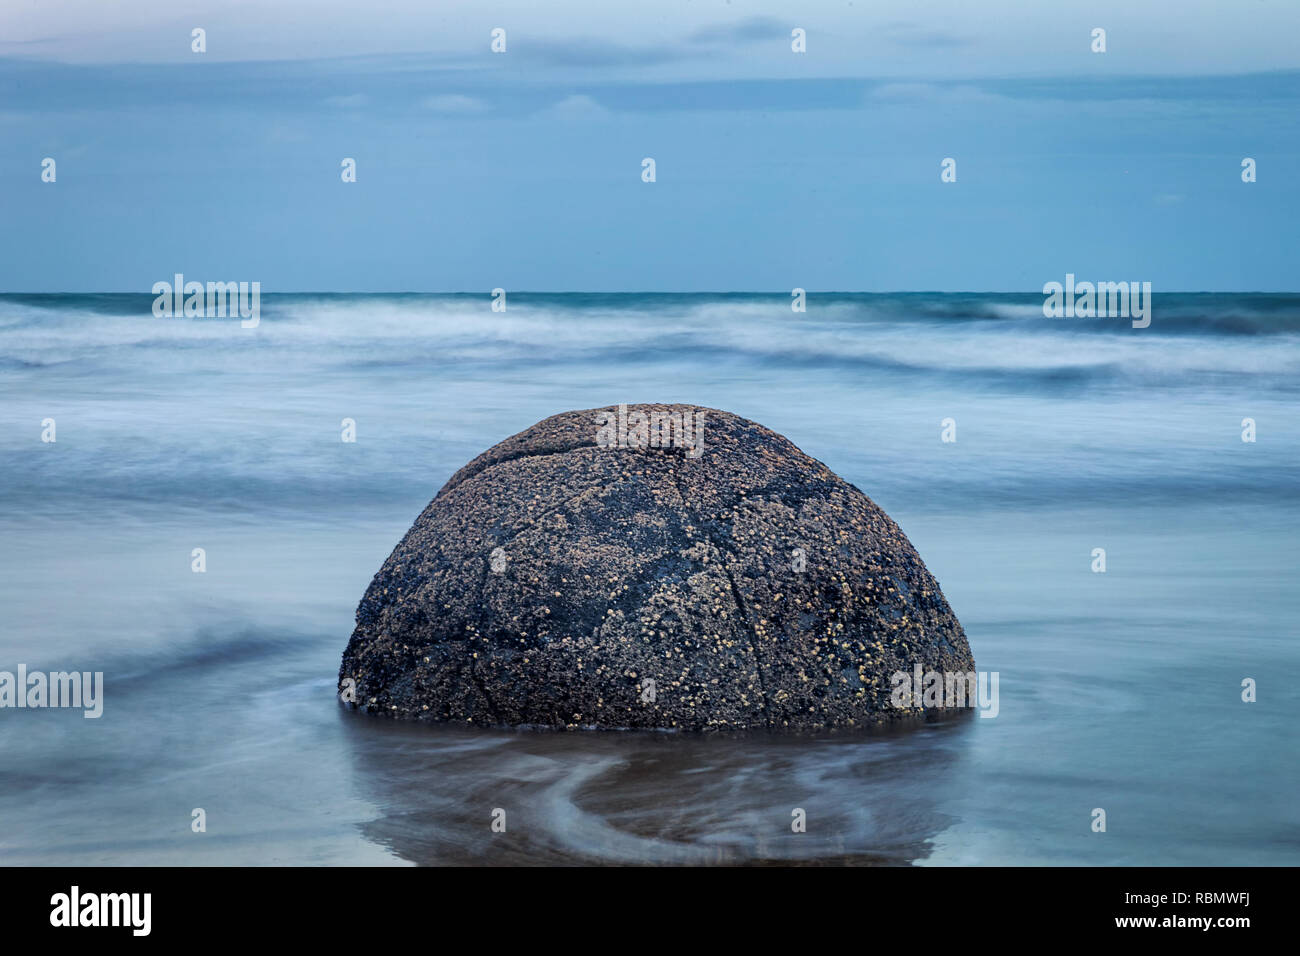 Evening view of perfect spherical stone at Moeraki boulders beach, New Zealand Stock Photo